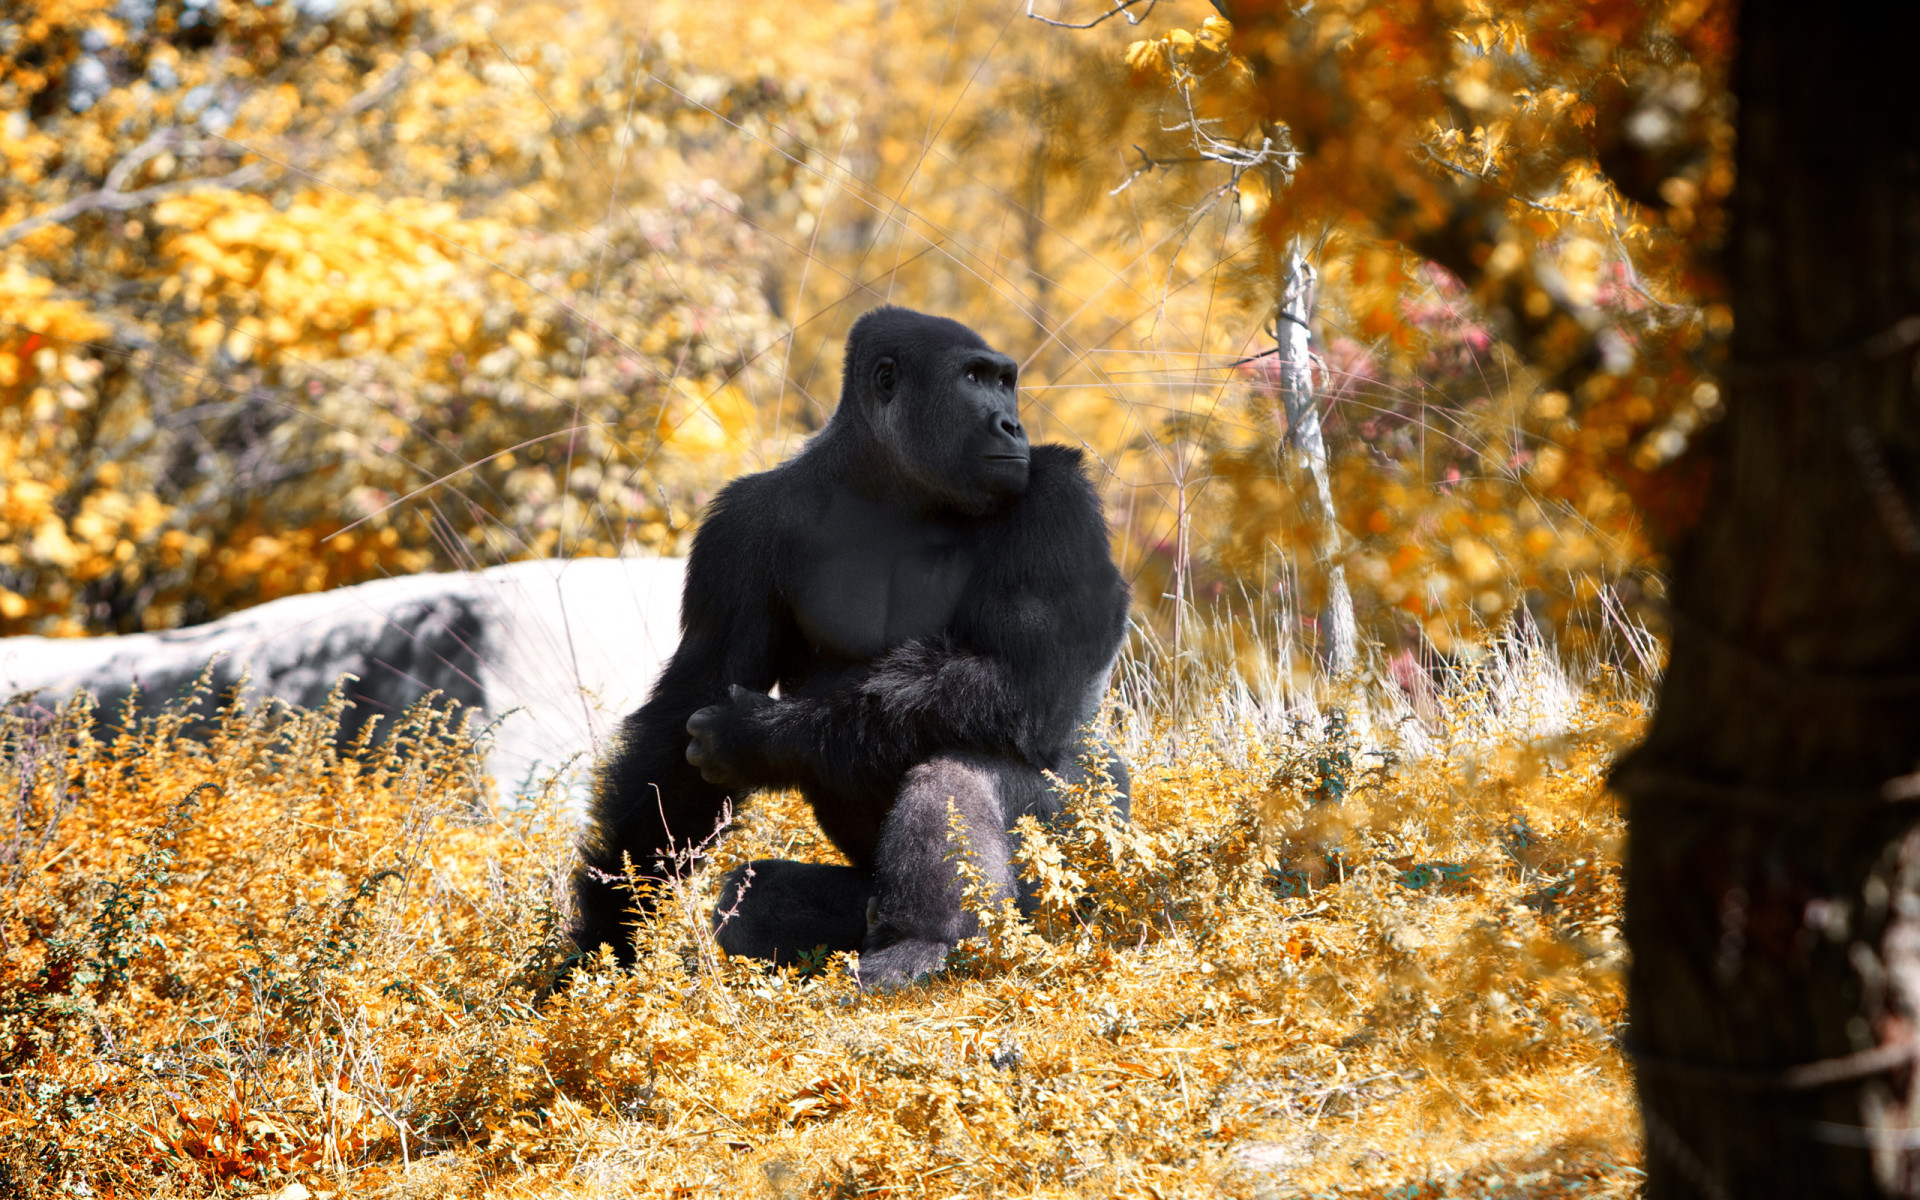 Gorilla in the autumn